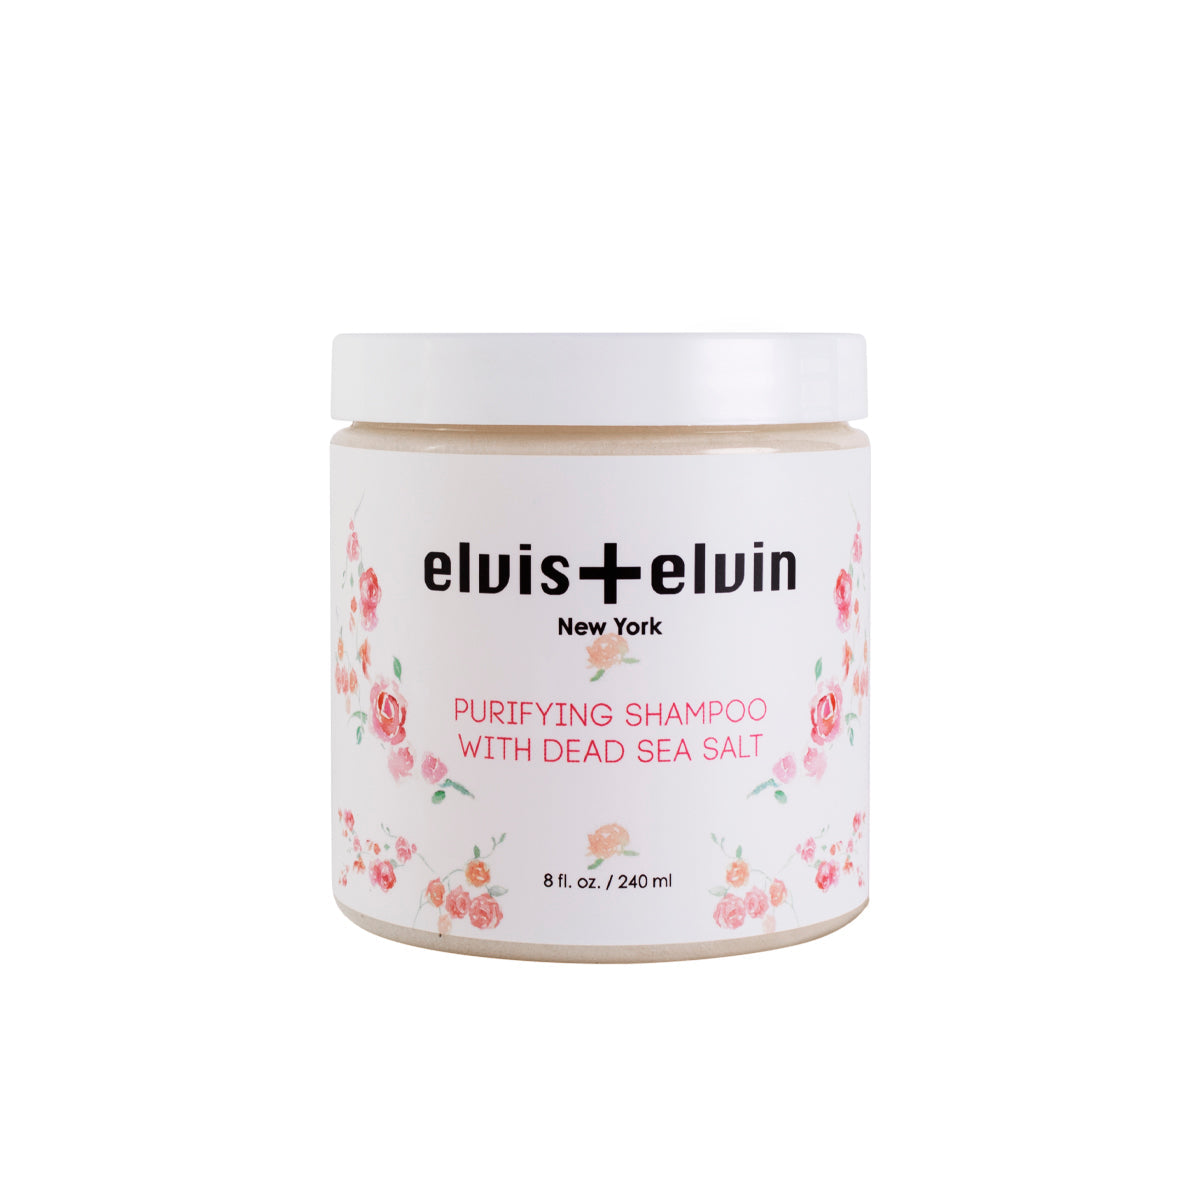  (New) Purifying Shampoo with Dead Sea Salt by elvis+elvin elvis+elvin Perfumarie